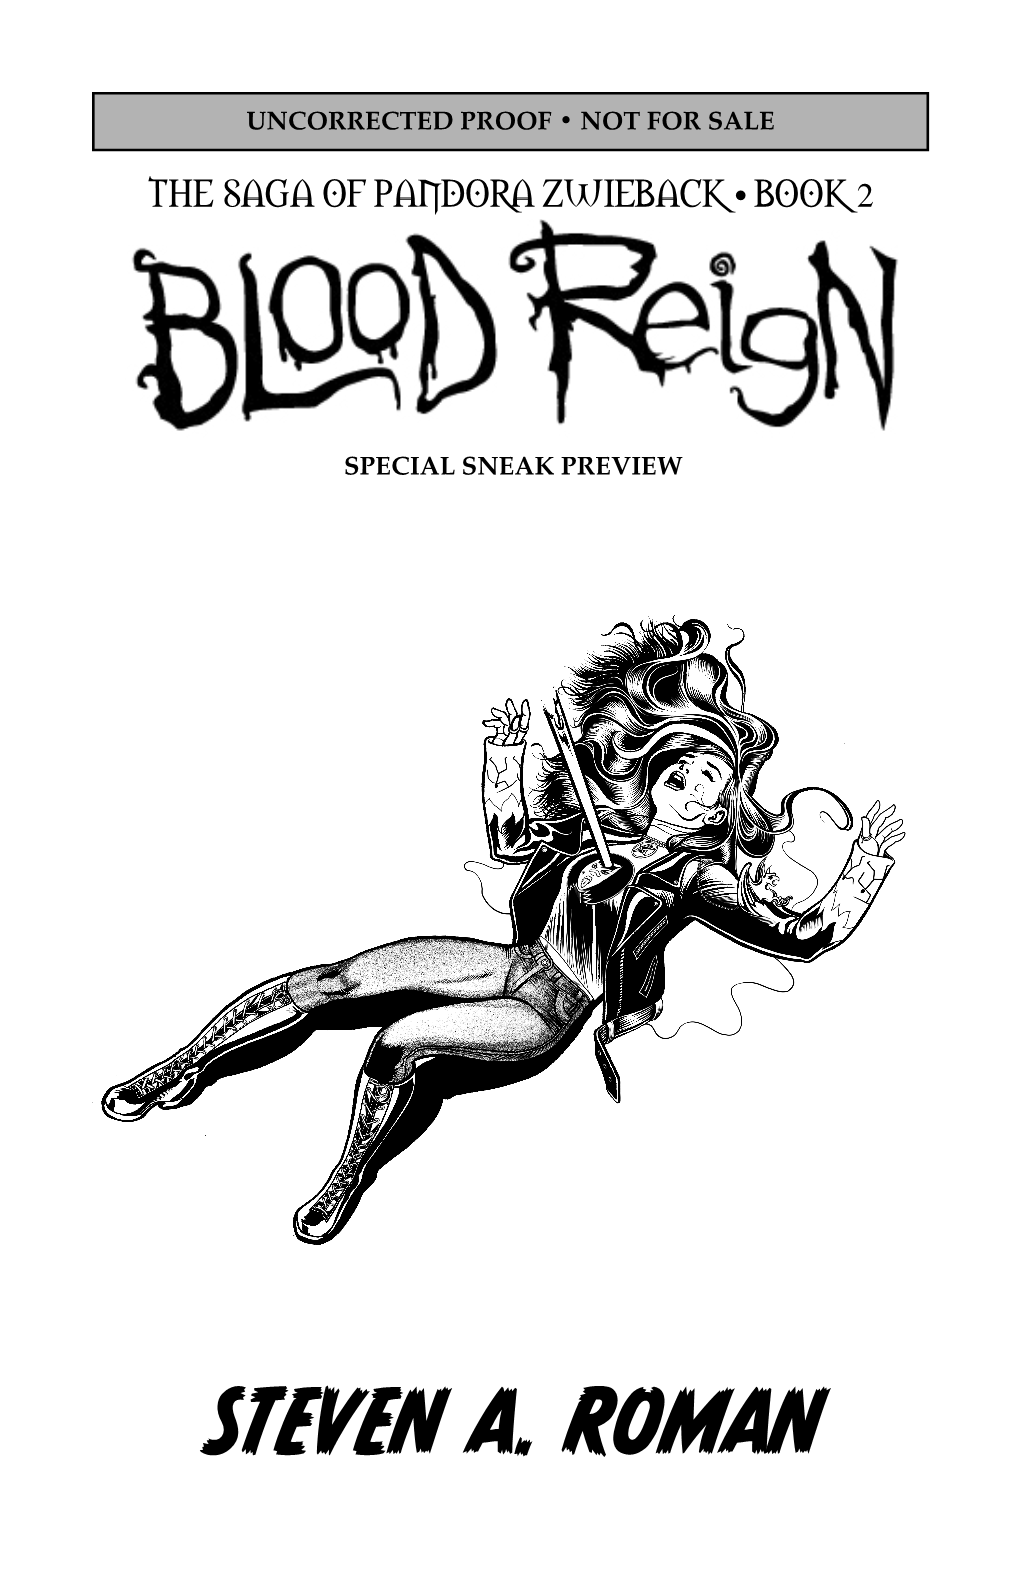 Blood Reign Preview Copyright © 2012 Steven A